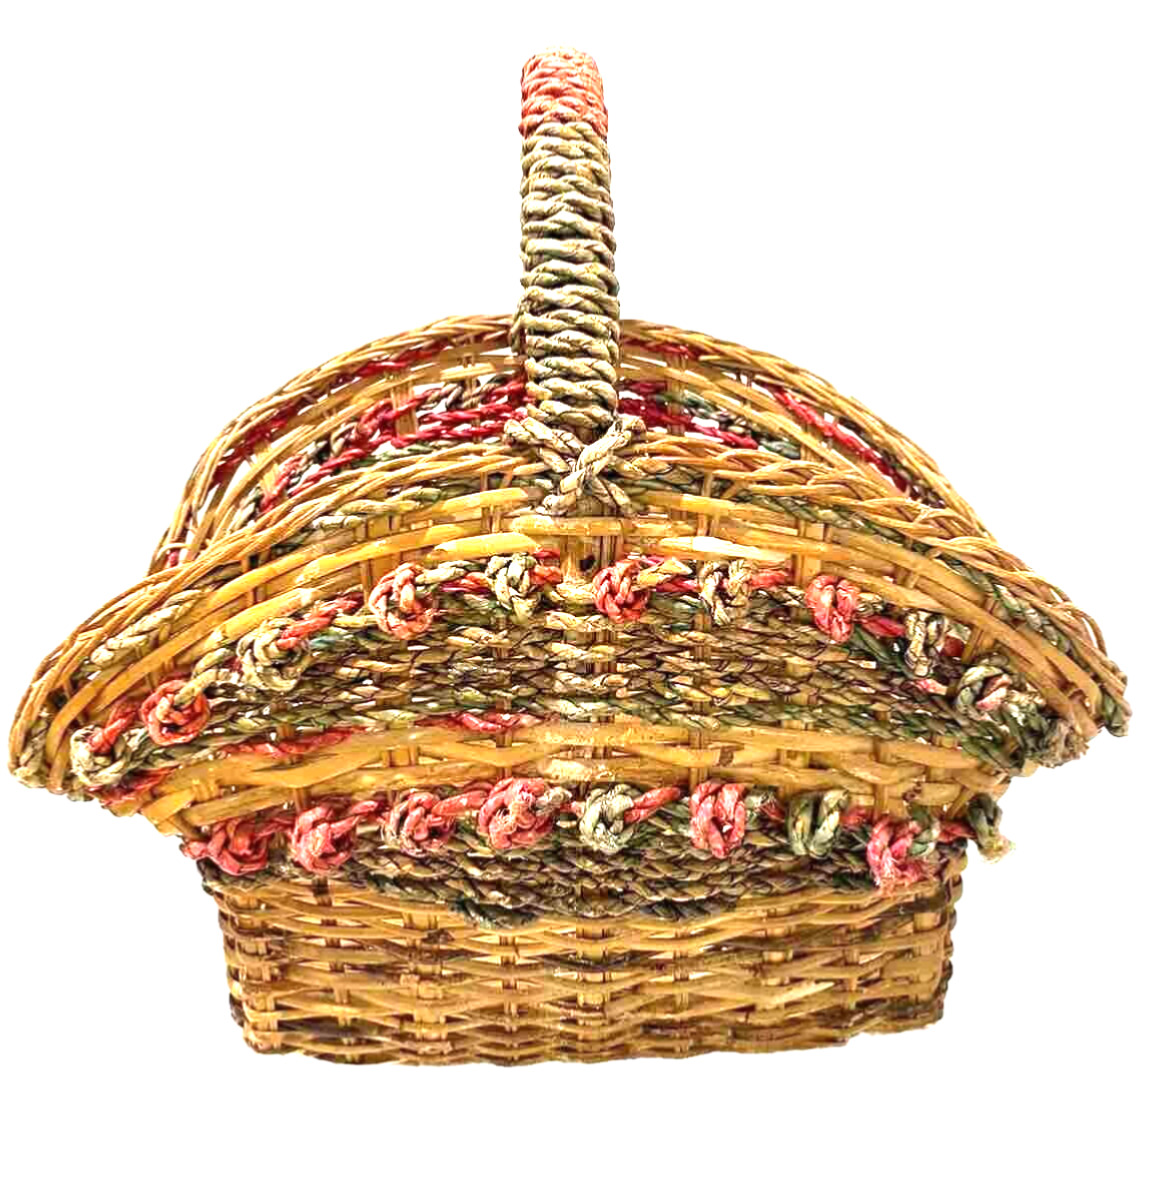 Colorful Vintage Wicker Gathering Basket Large Size